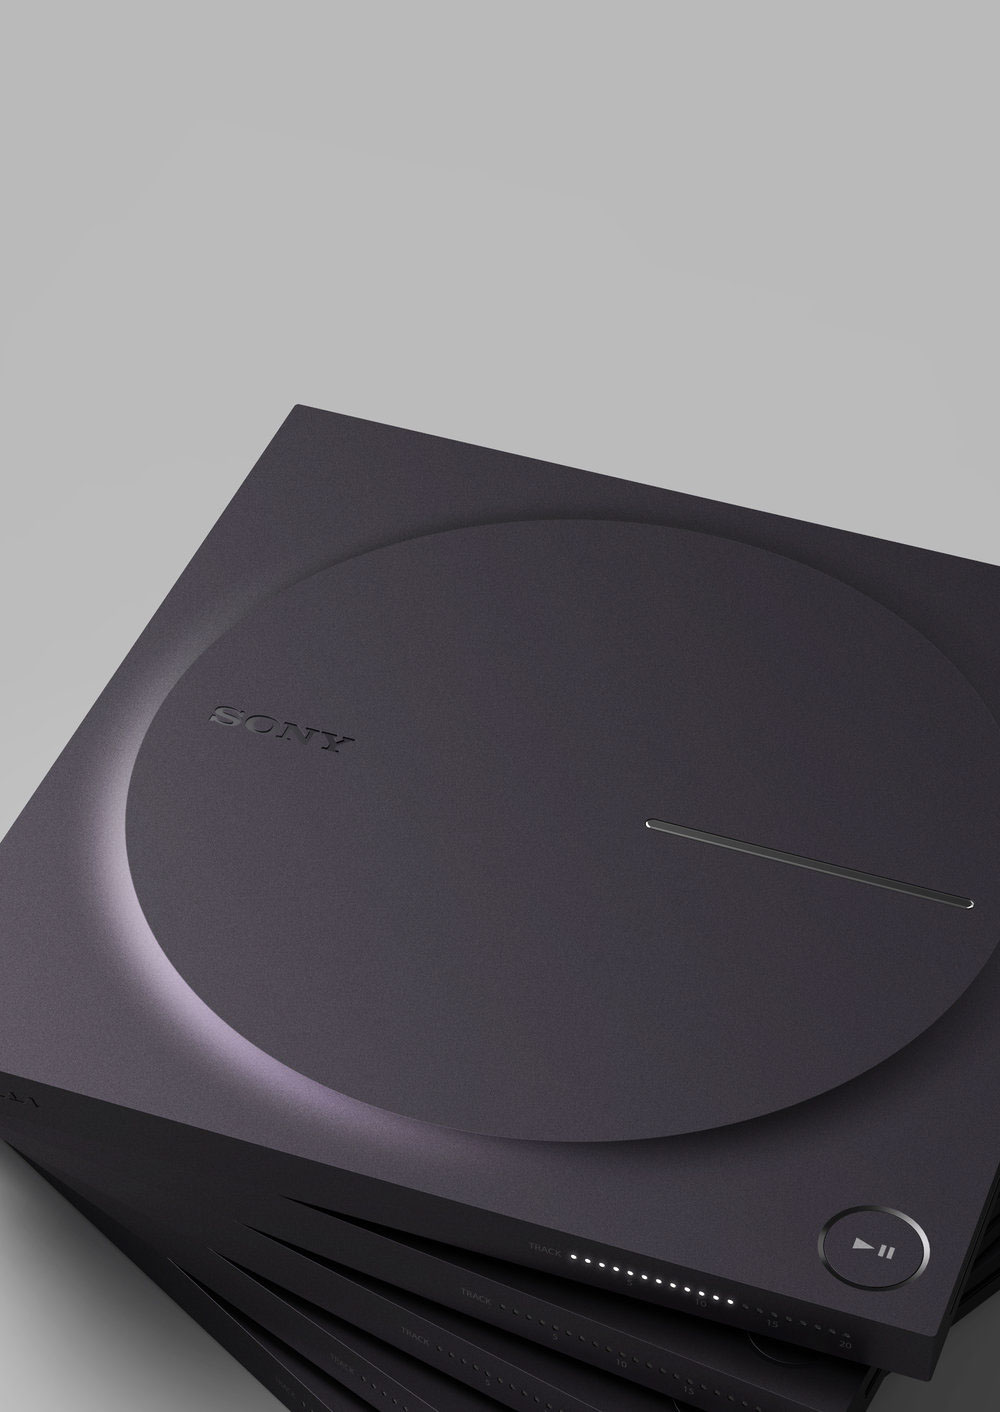 design Sony walkman discman concept